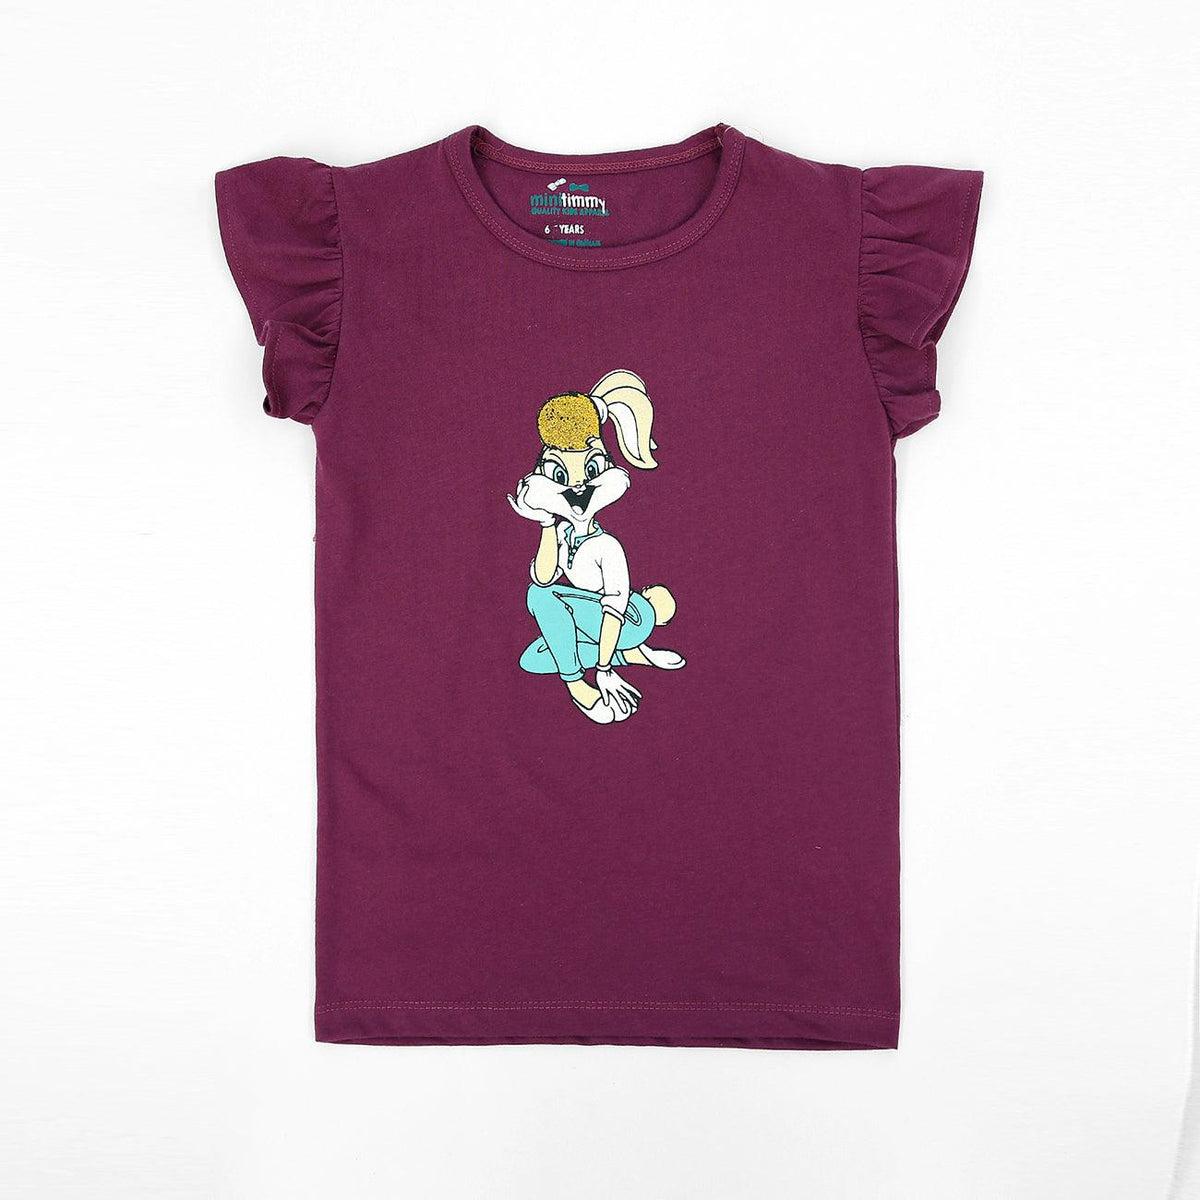 Girls Purple Soft Cotton Printed T-Shirt 9 MONTH - 10 YRS (MI-11398) - Brands River